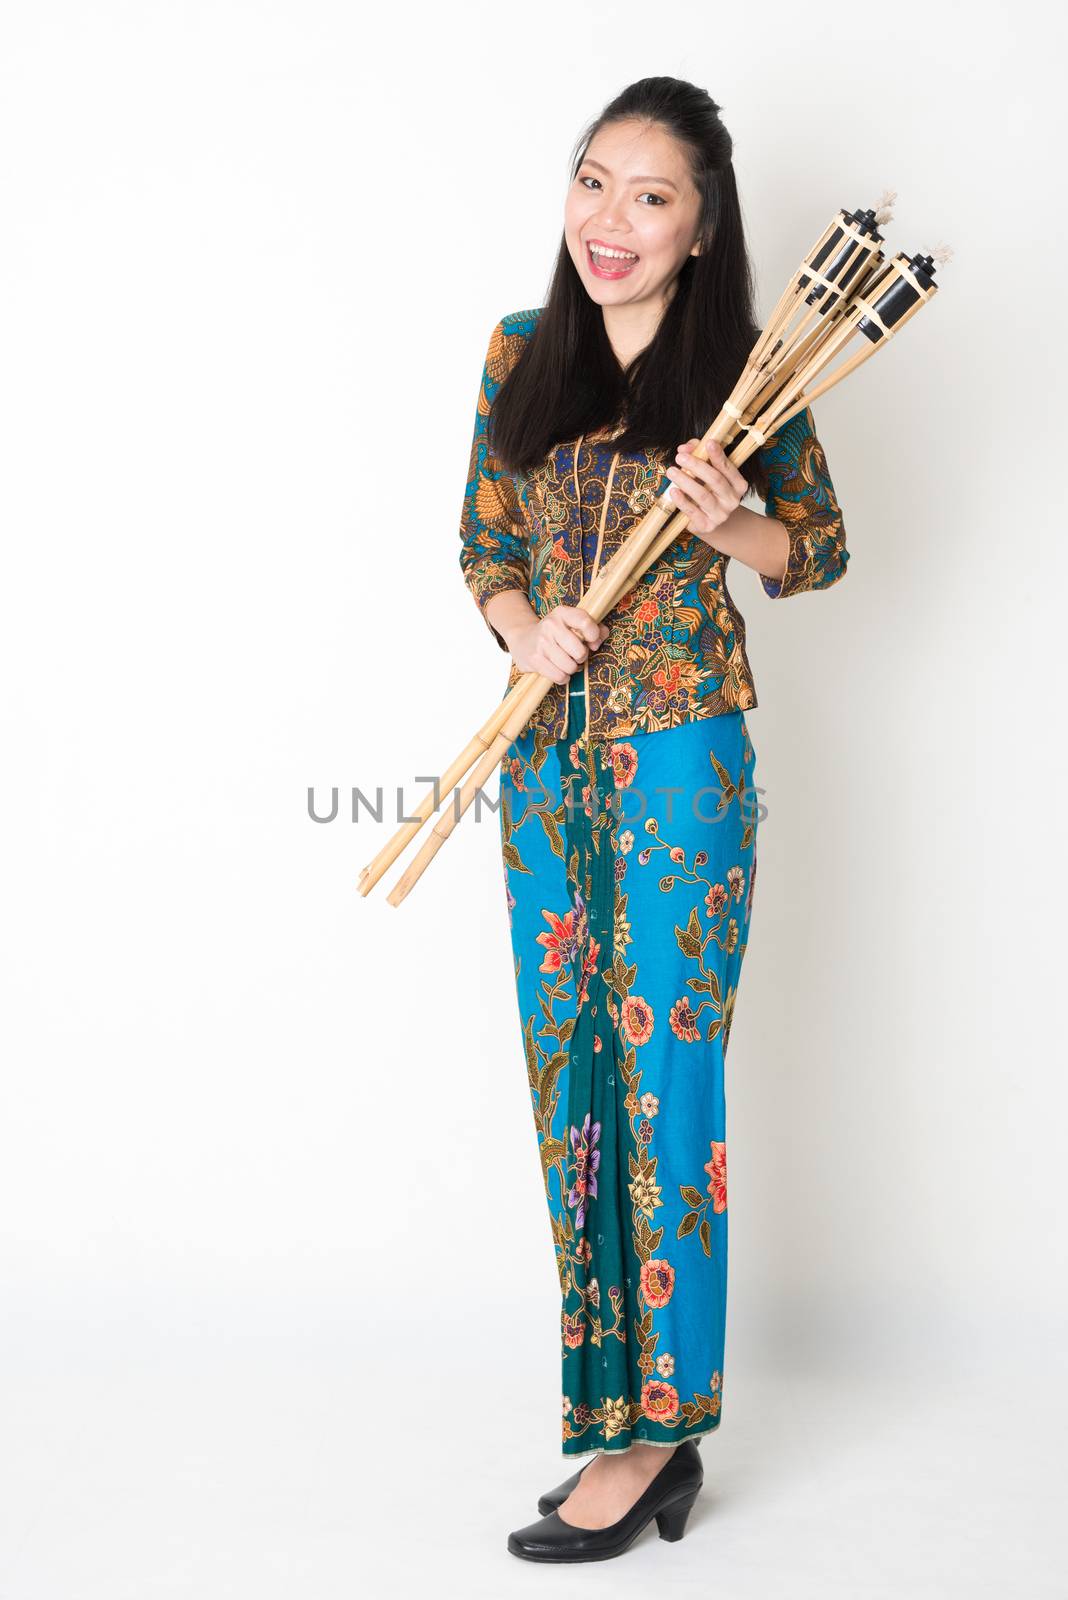 Full body portrait of Southeast Asian girl in batik dress hands holding bamboo torch standing on plain background.